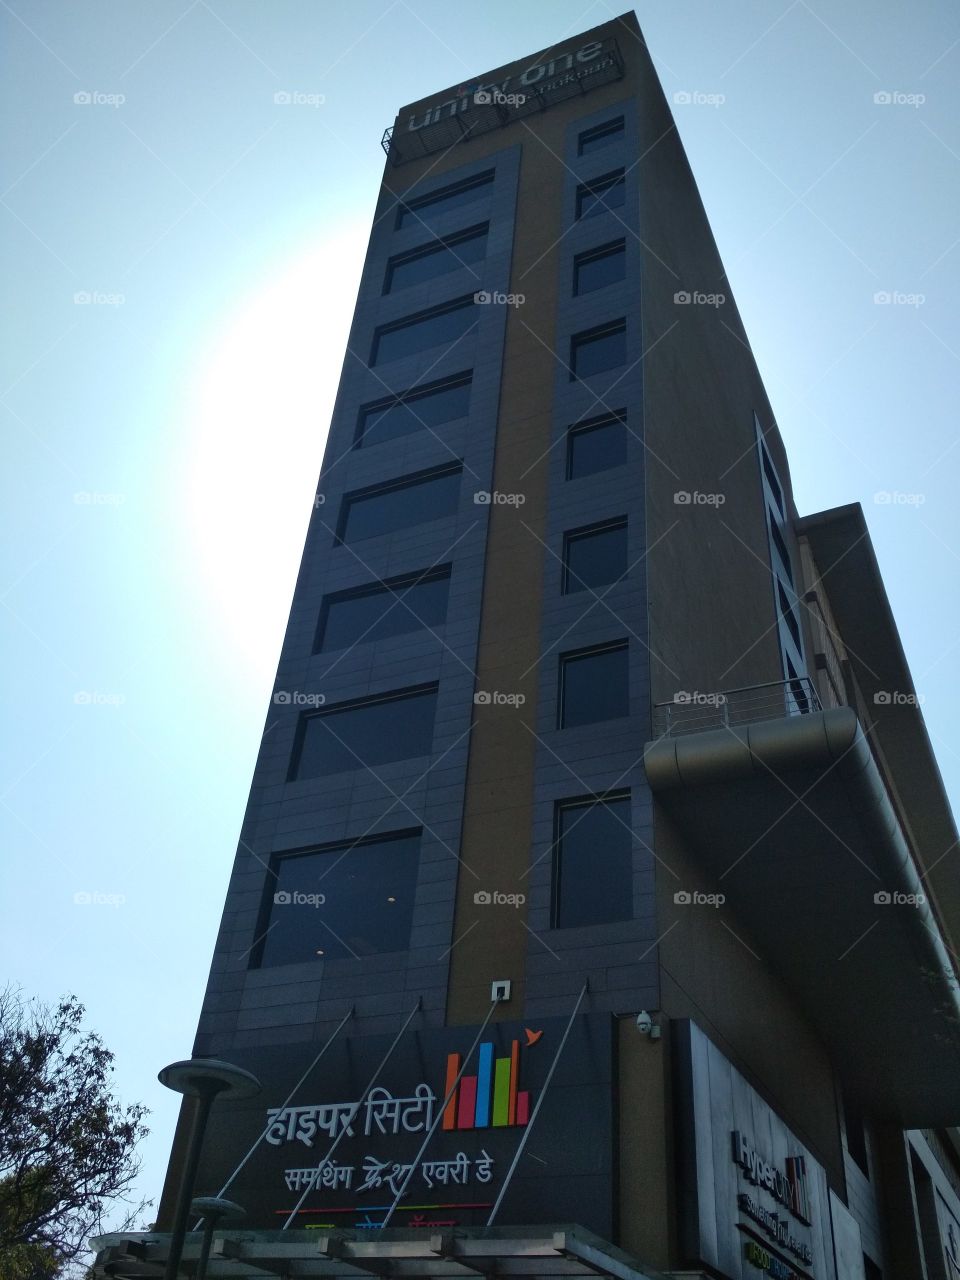 Tall building in new delhi